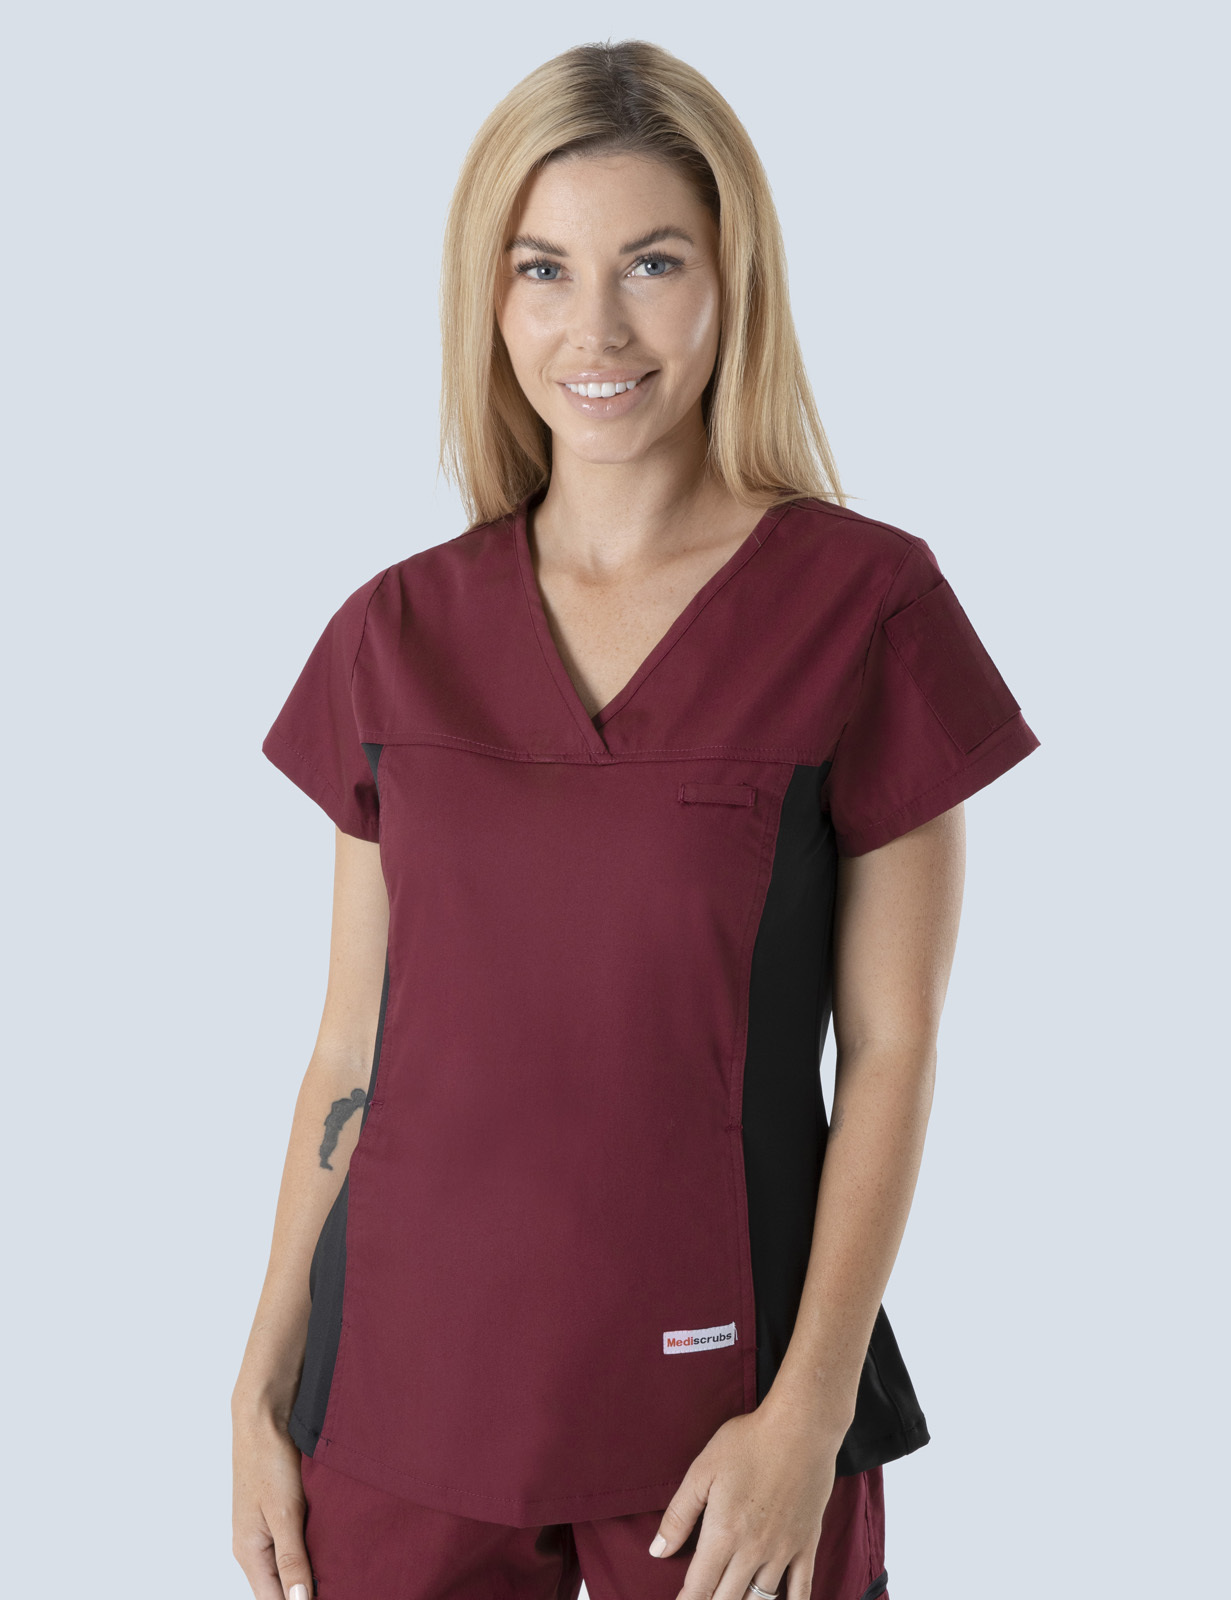 Bundaberg Hospital Renal Unit (Women's Fit Spandex Scrub Top and Cargo Pants in Burgundy incl Logos)